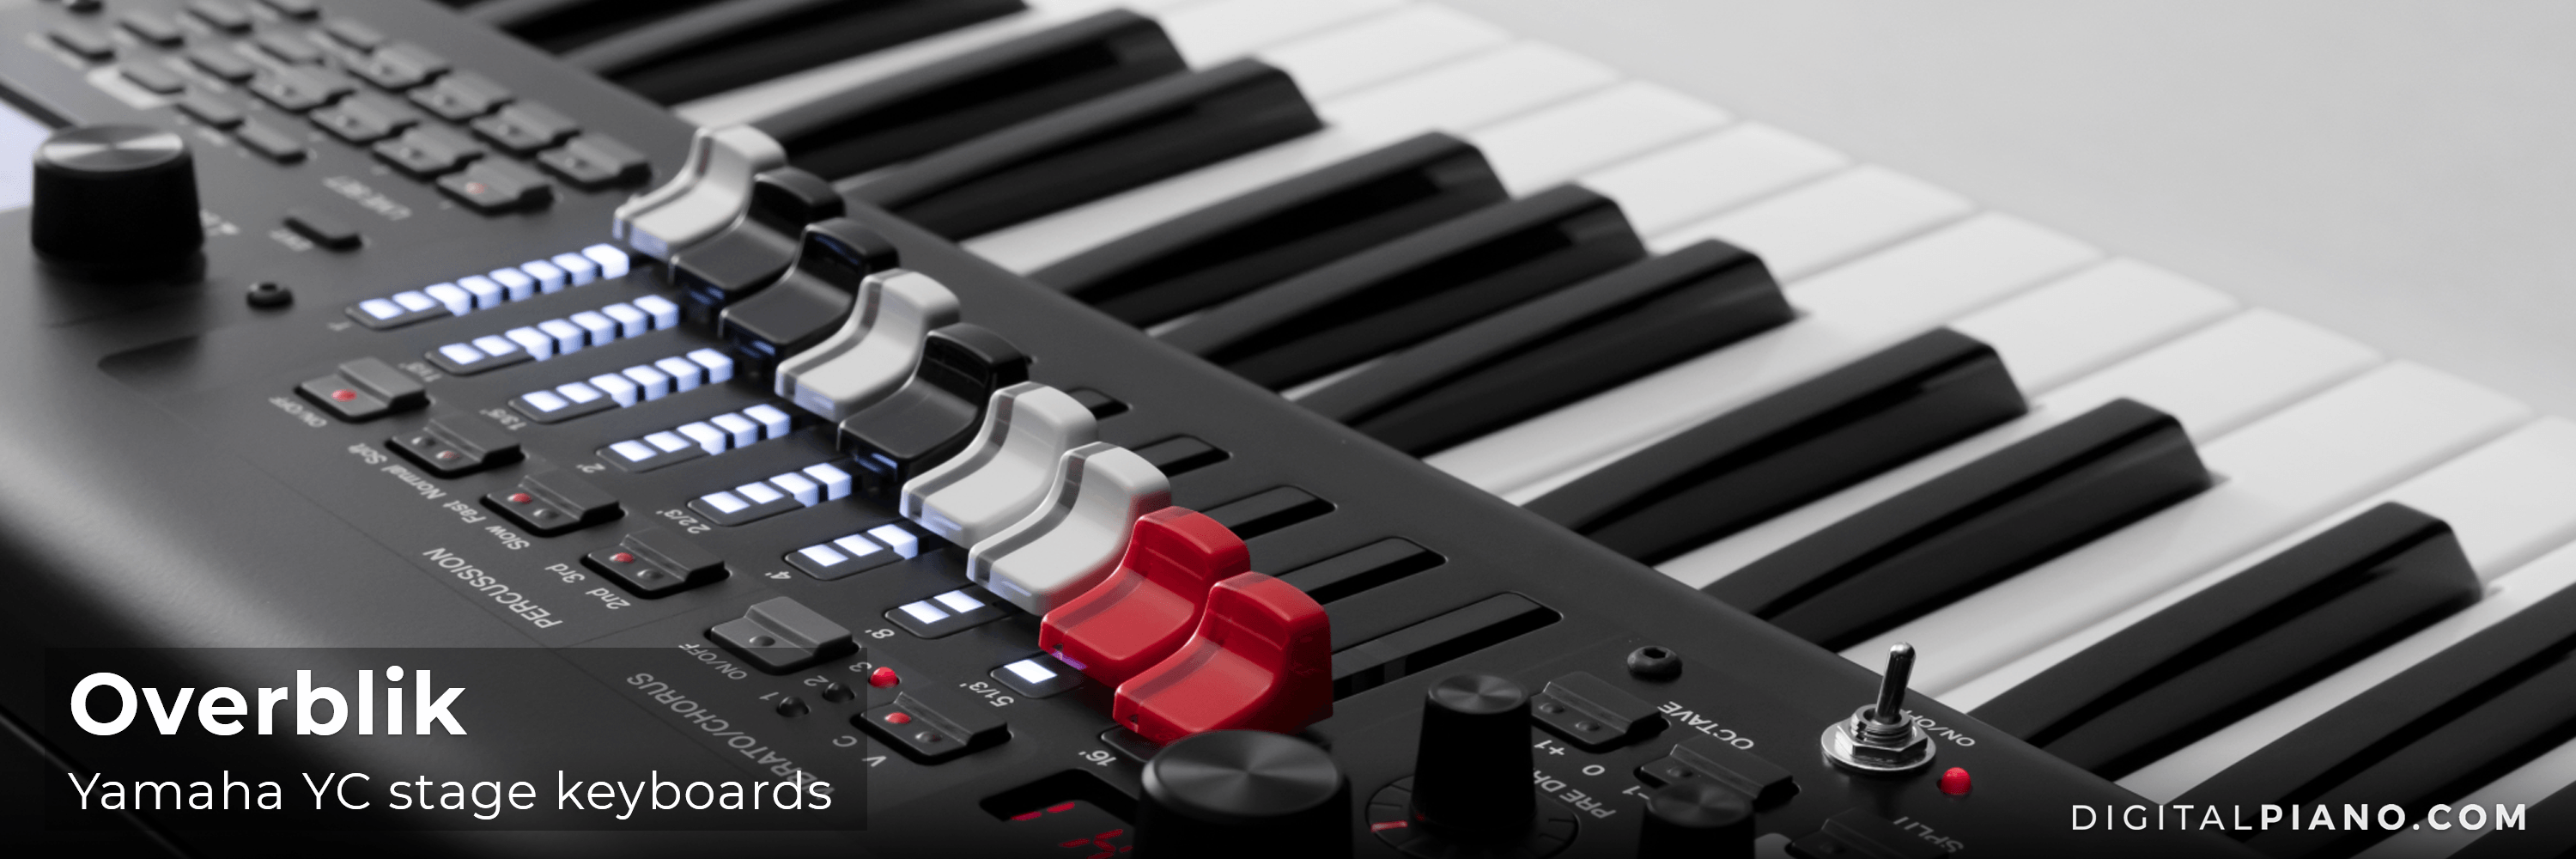 Overblik - Yamaha YC stage keyboards